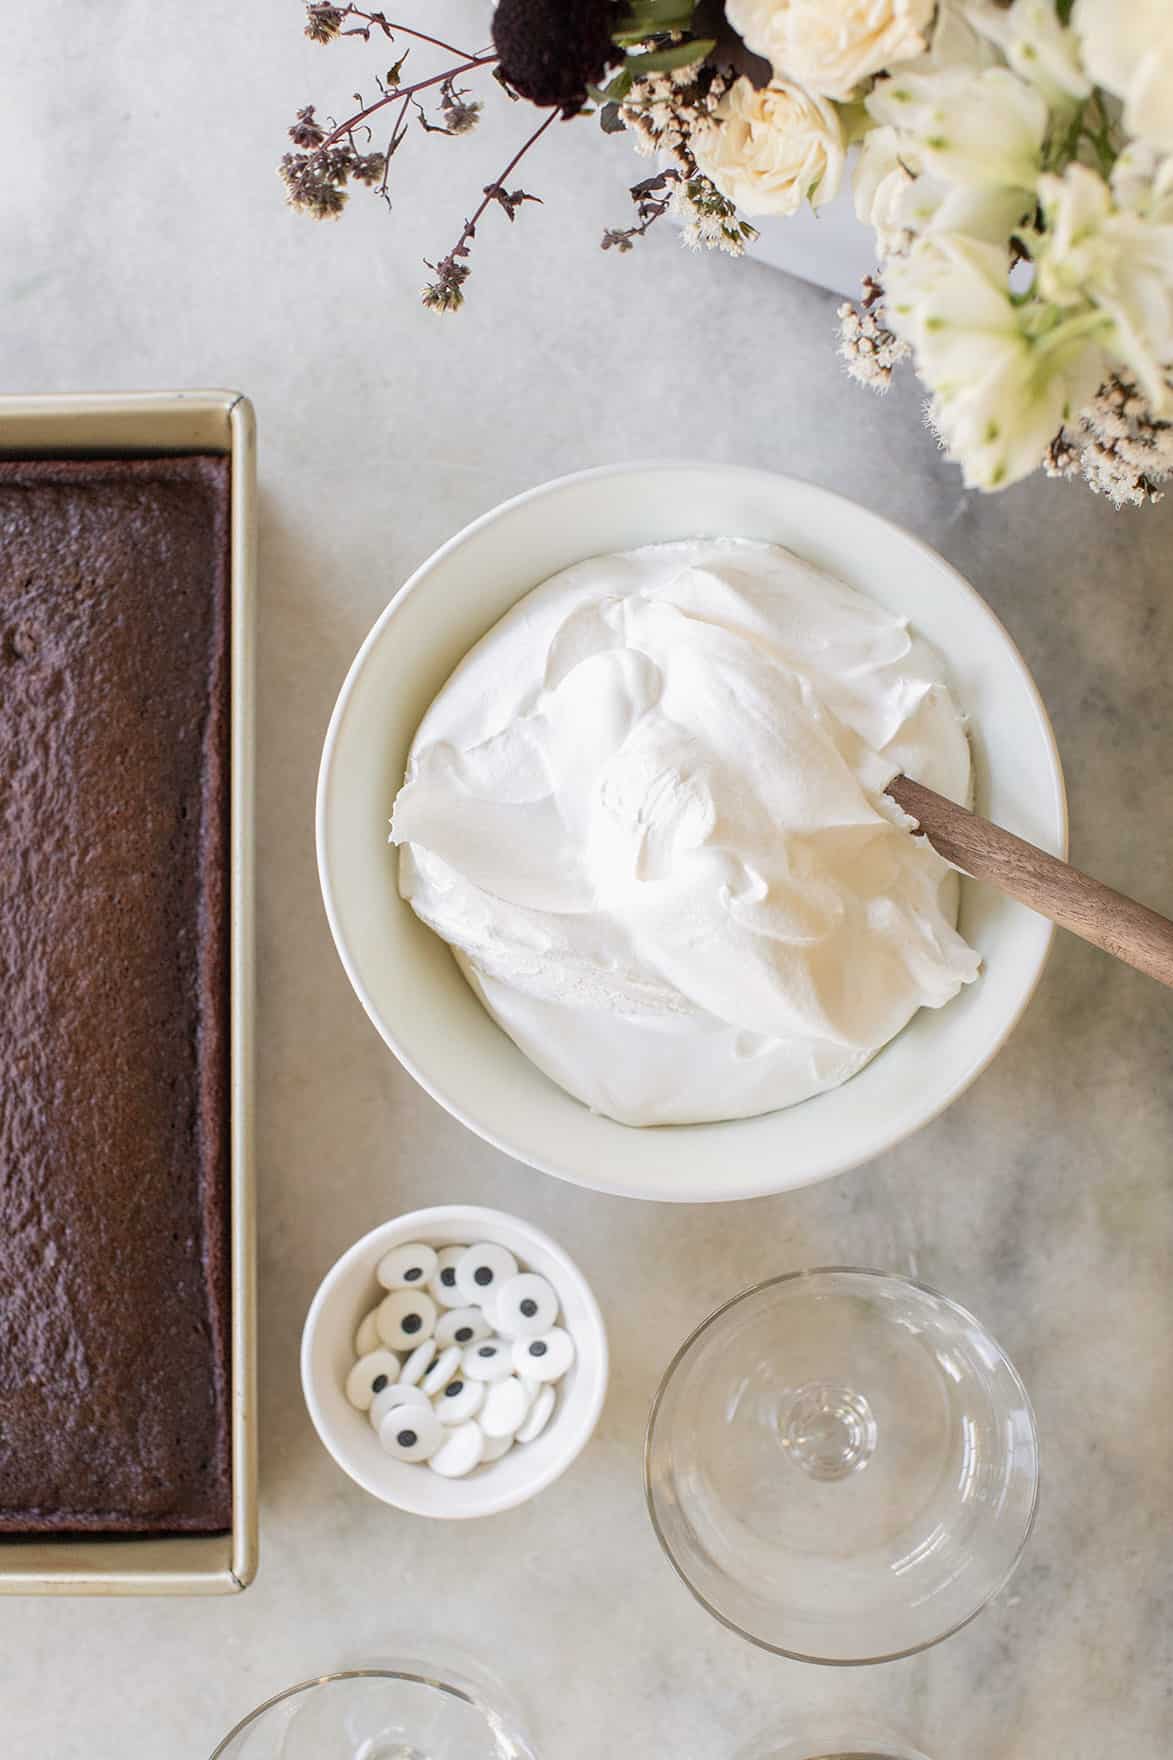 whipped cream and chocolate cake to make trifles